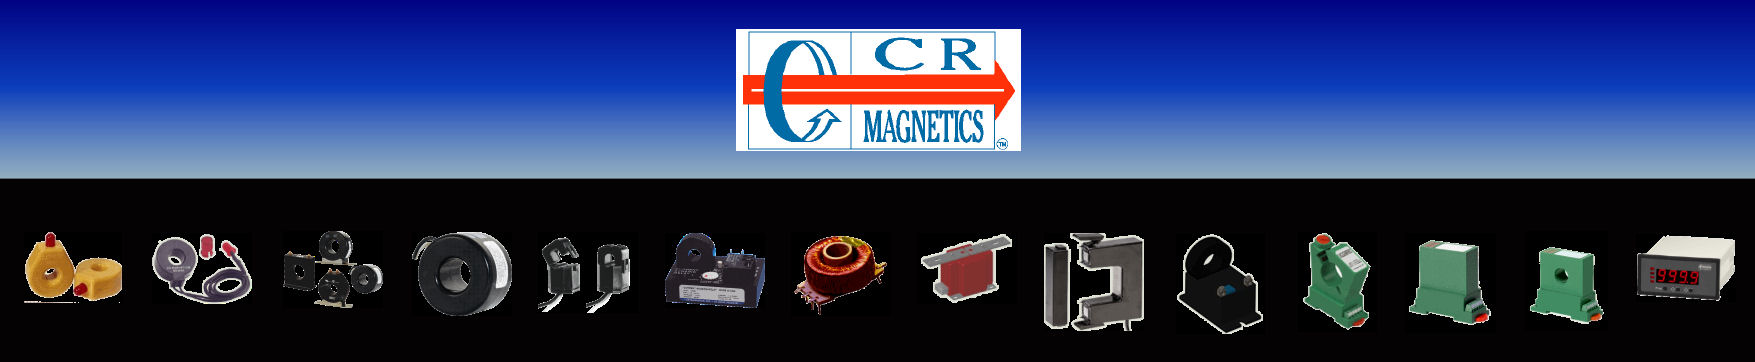 CR Magnetics CT's